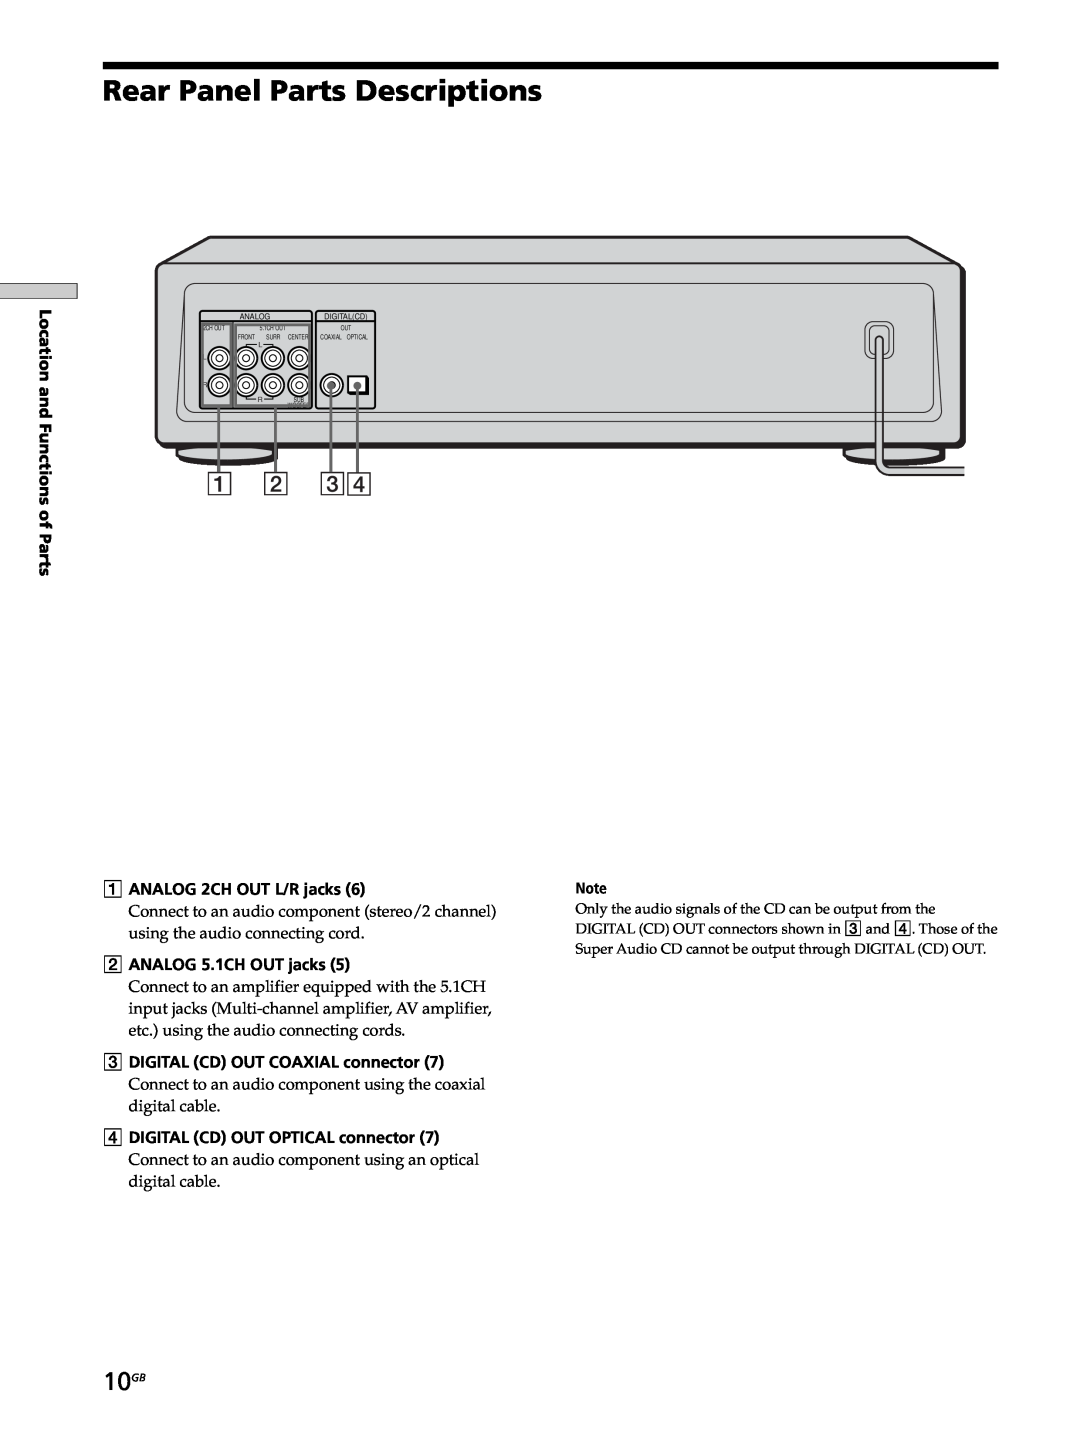 Sony SCD-XB770 operating instructions Rear Panel Parts Descriptions, 10GB 